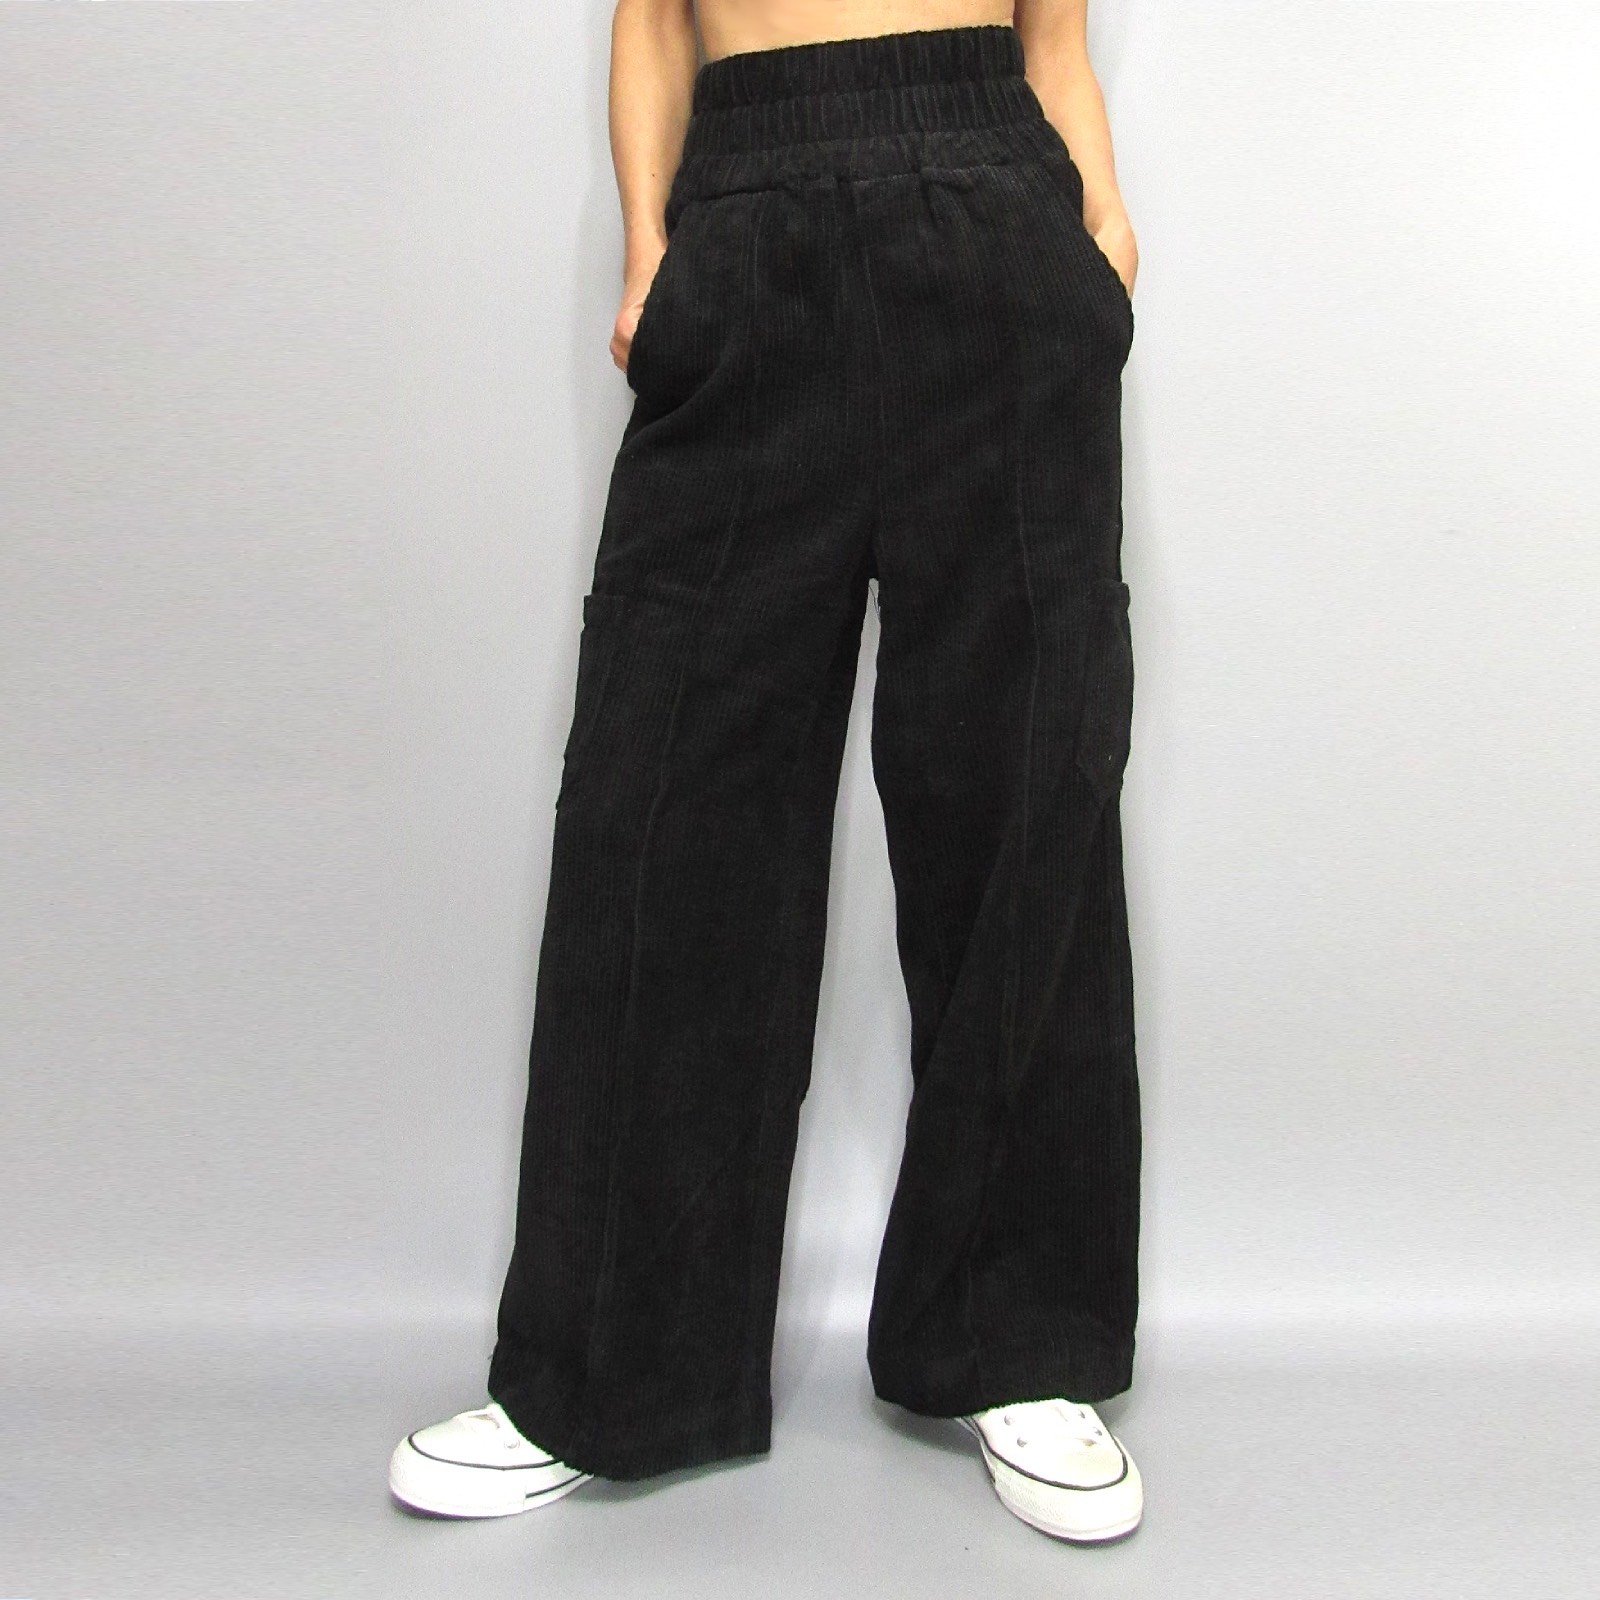 Pants266 Hi-Waist Wide Leg Corduroy Pants/Black